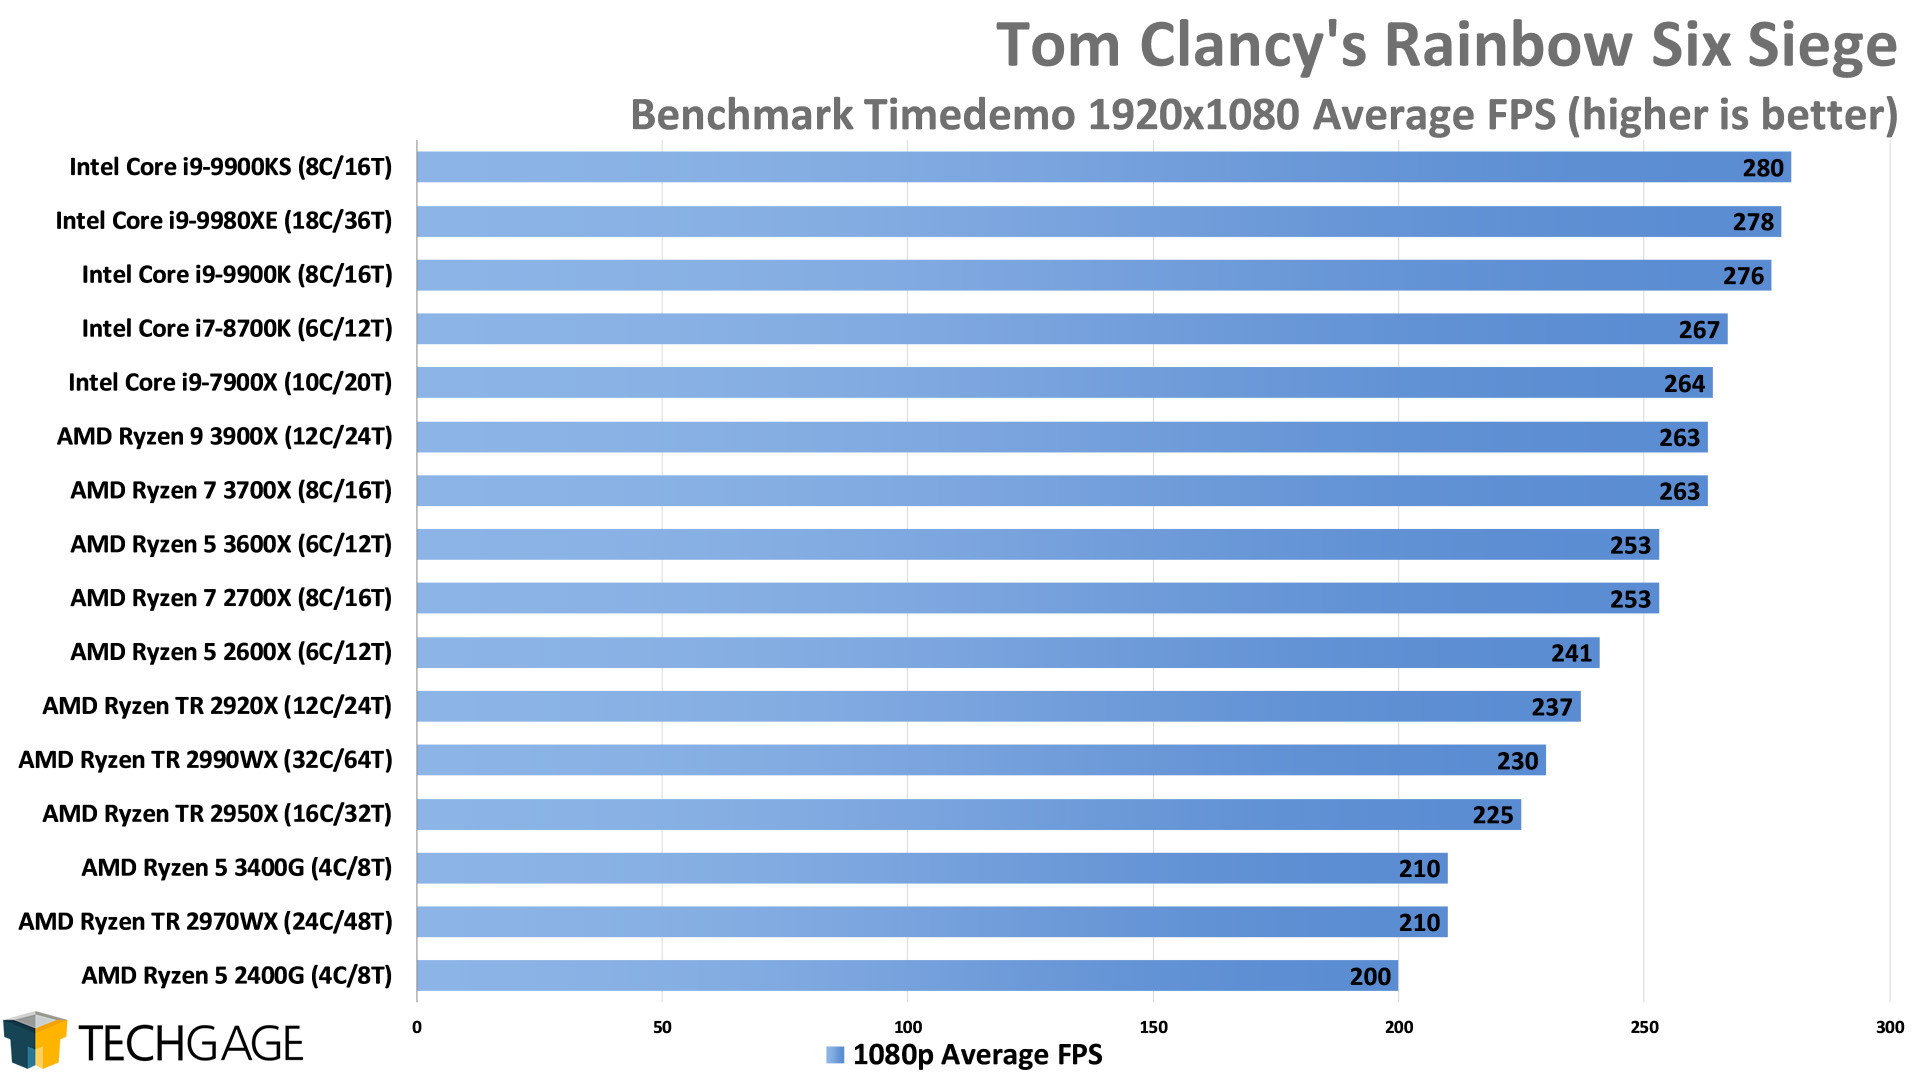 Tom Clancy's Rainbow Six Siege - 1080p Average FPS (Intel Core i9-9900KS)